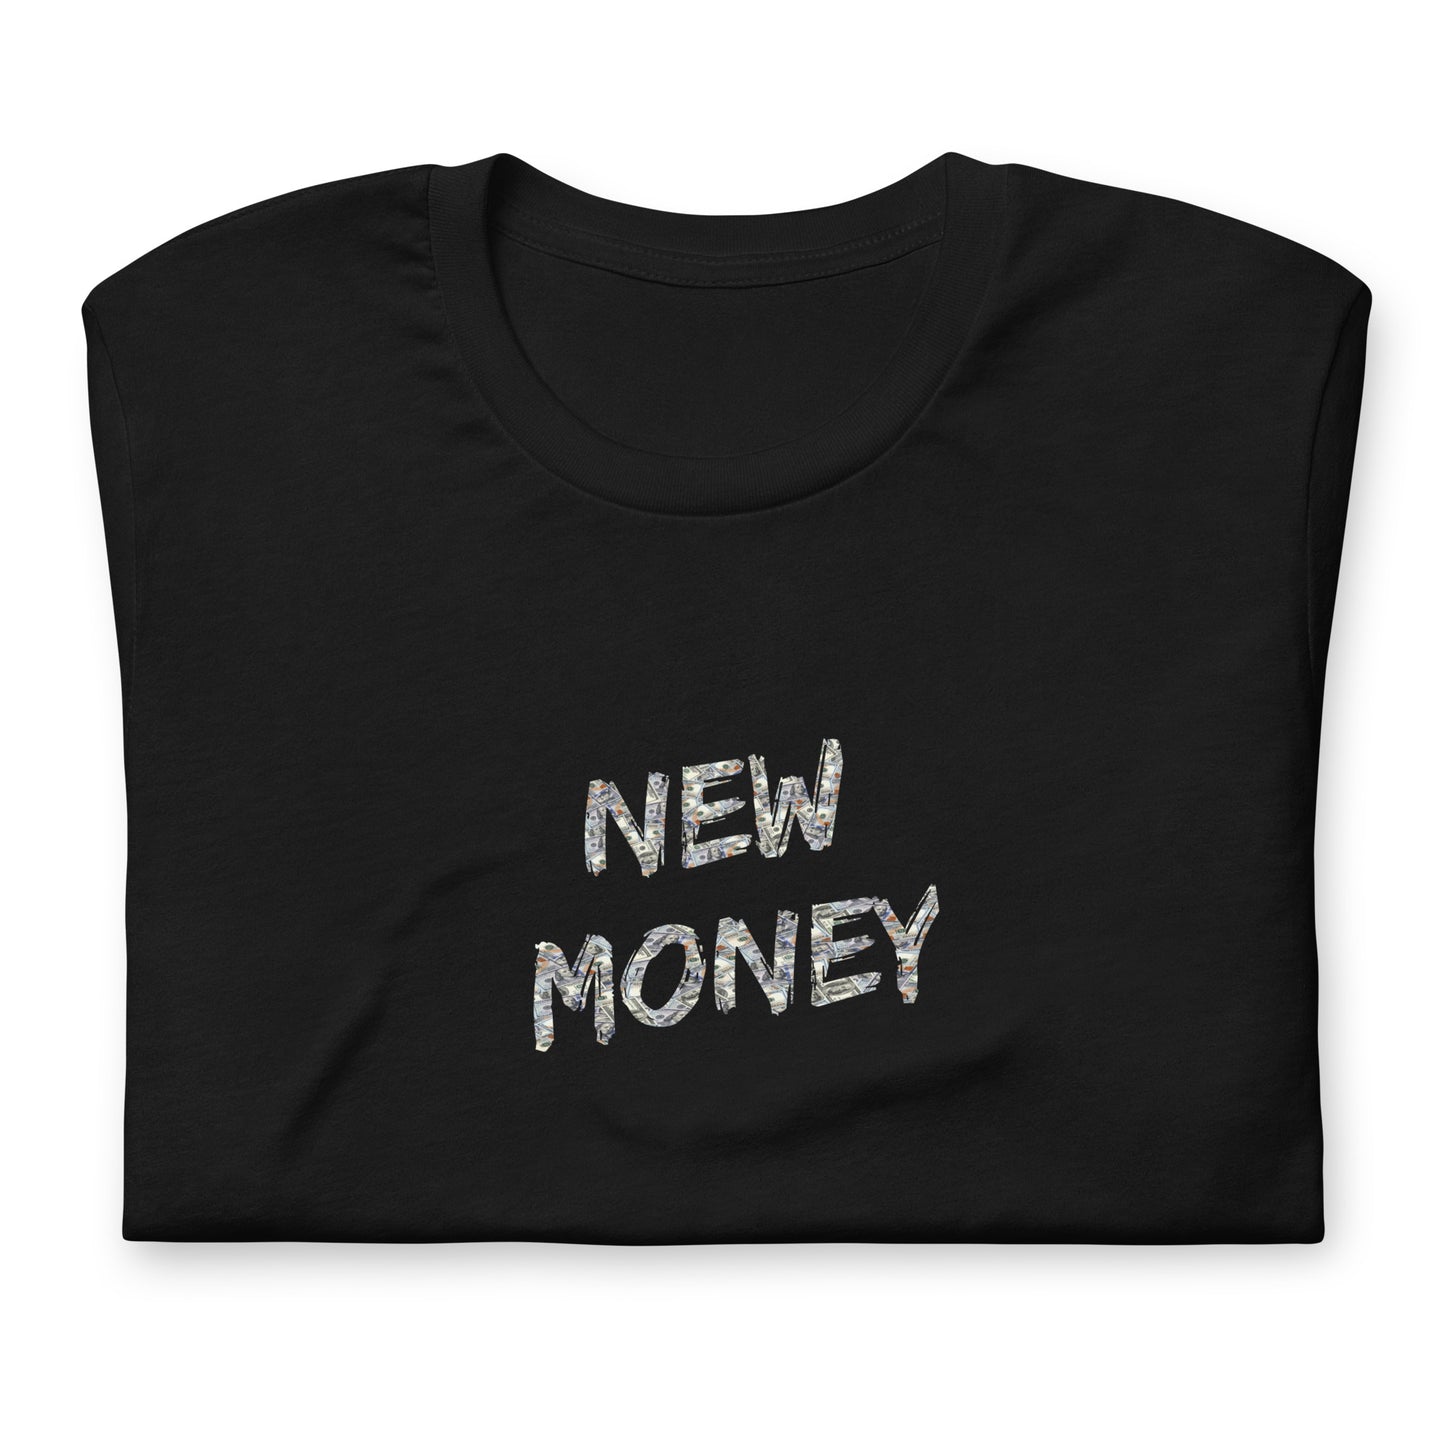 NEW MONEY - T-SHIRT - MONEY BACKGROUND